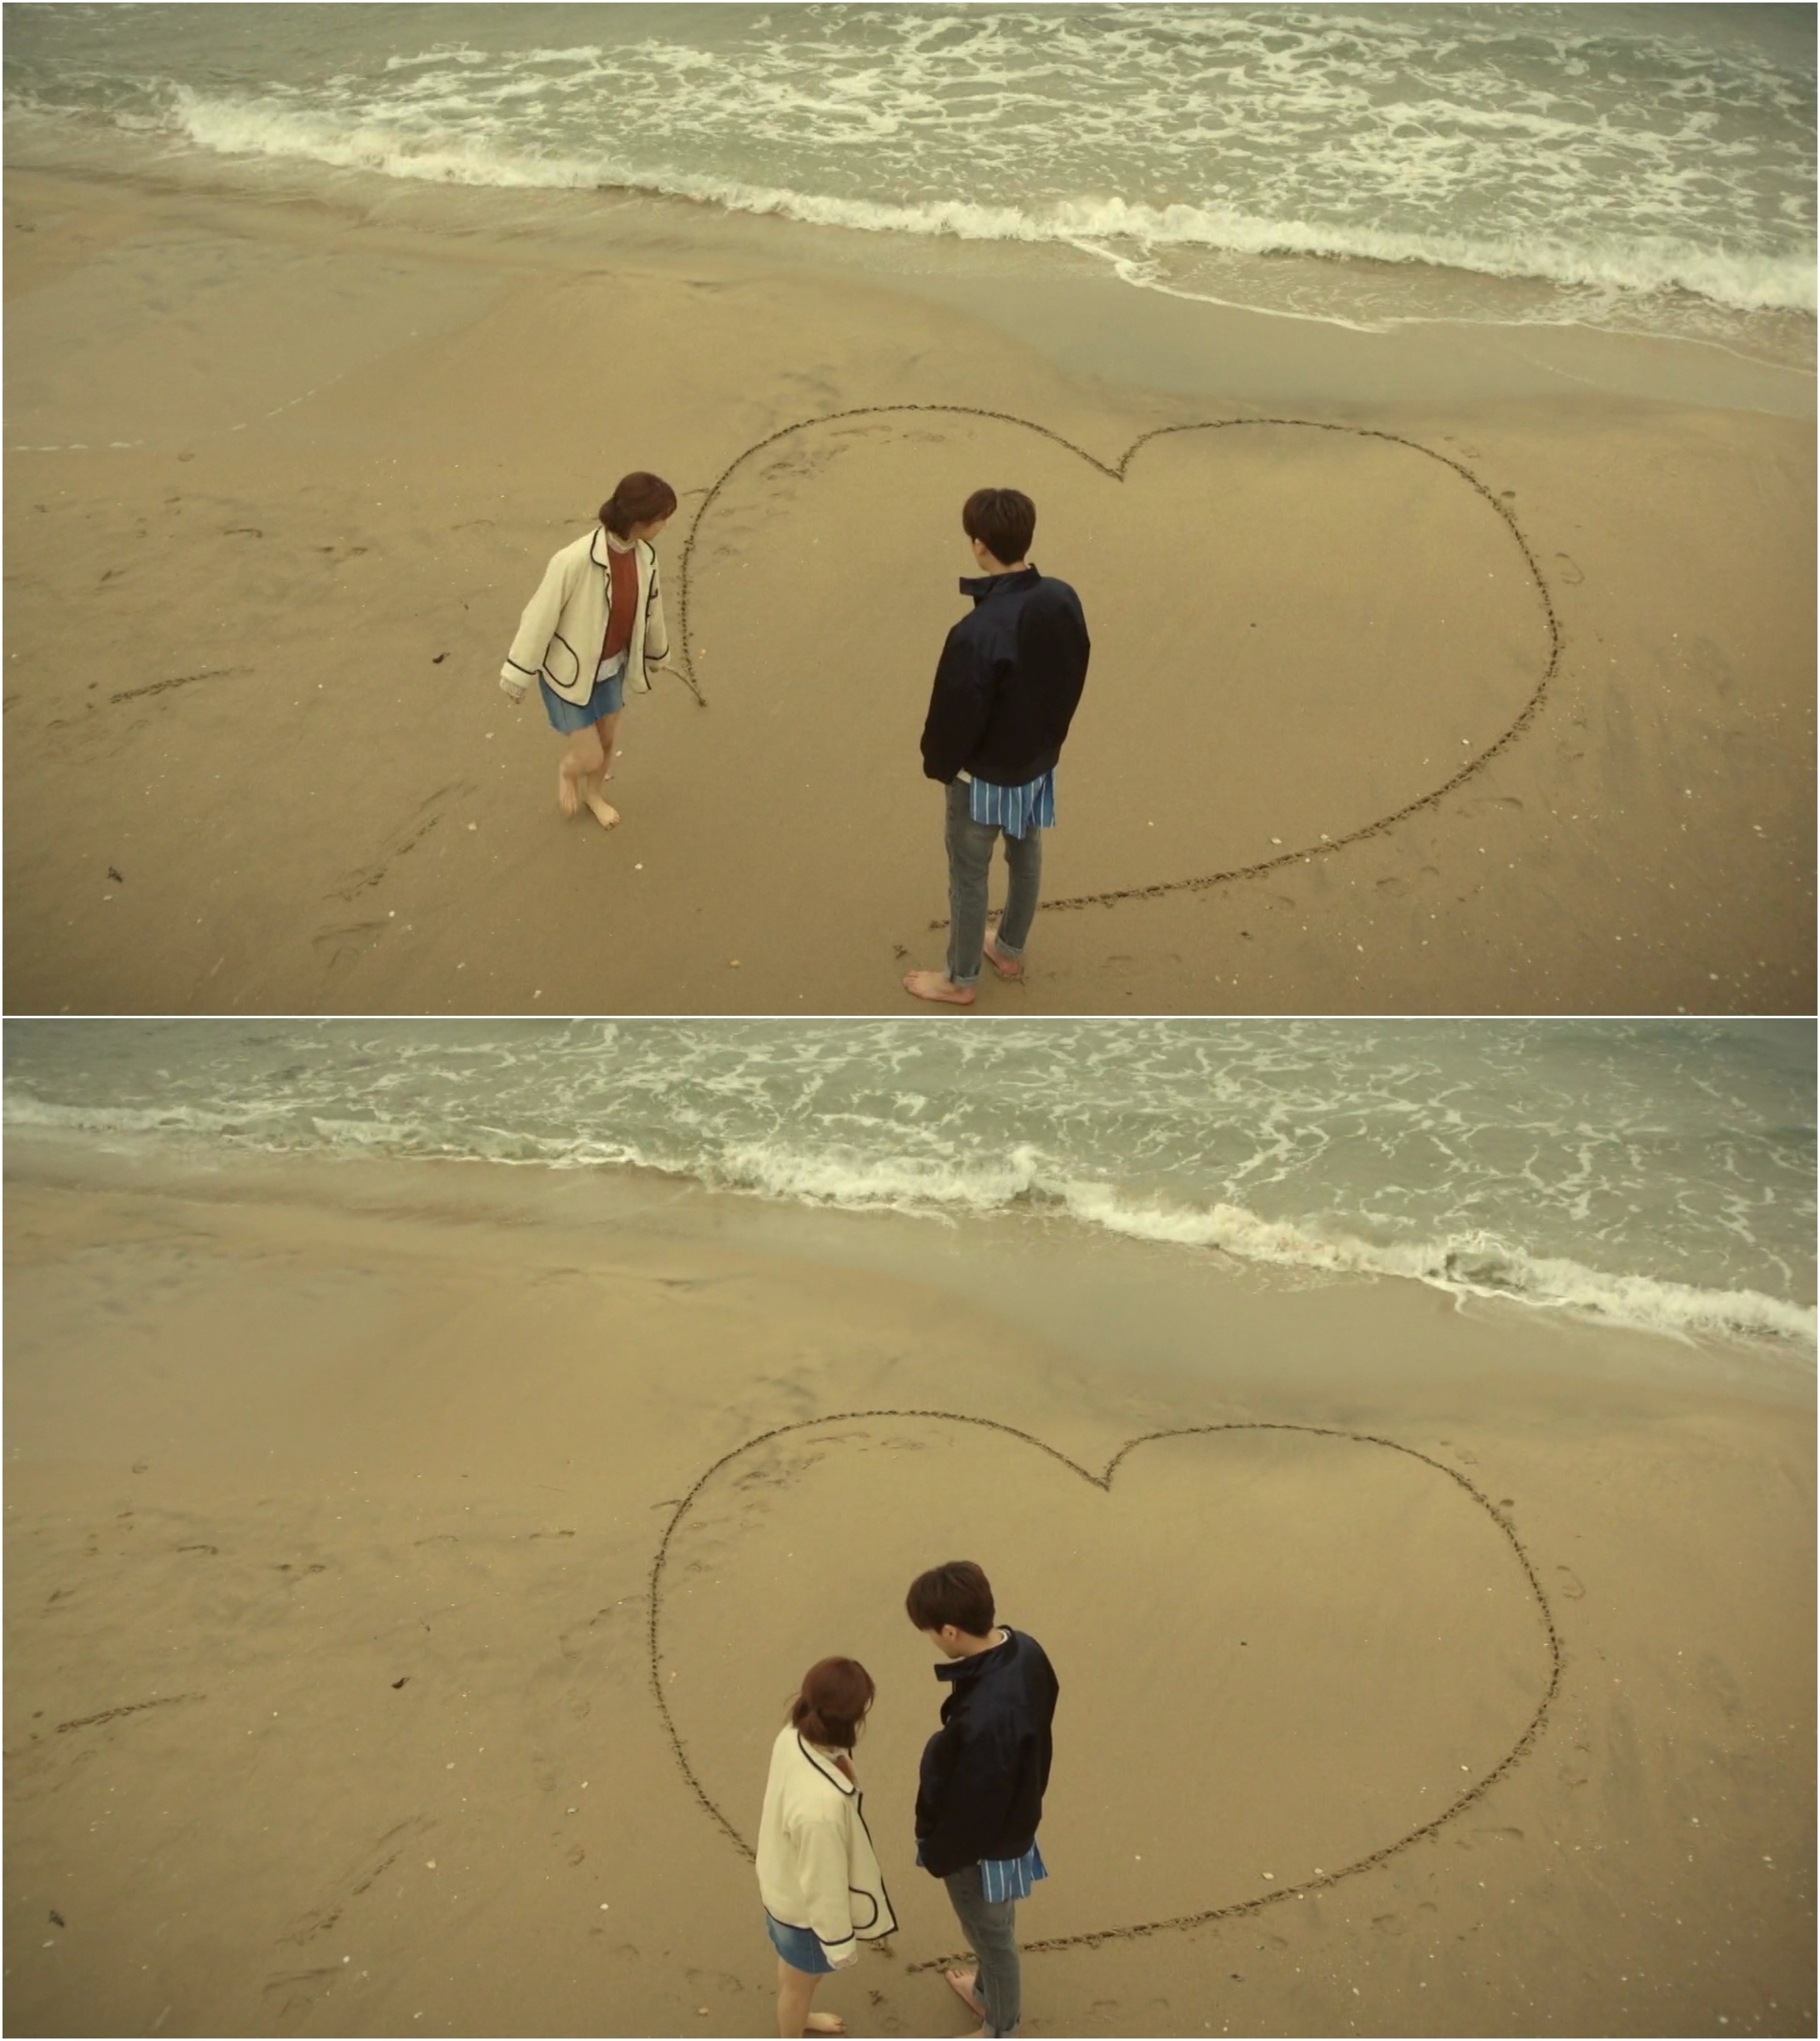 Bong-soon finishes the heart Min-hyuk draws in the sand 